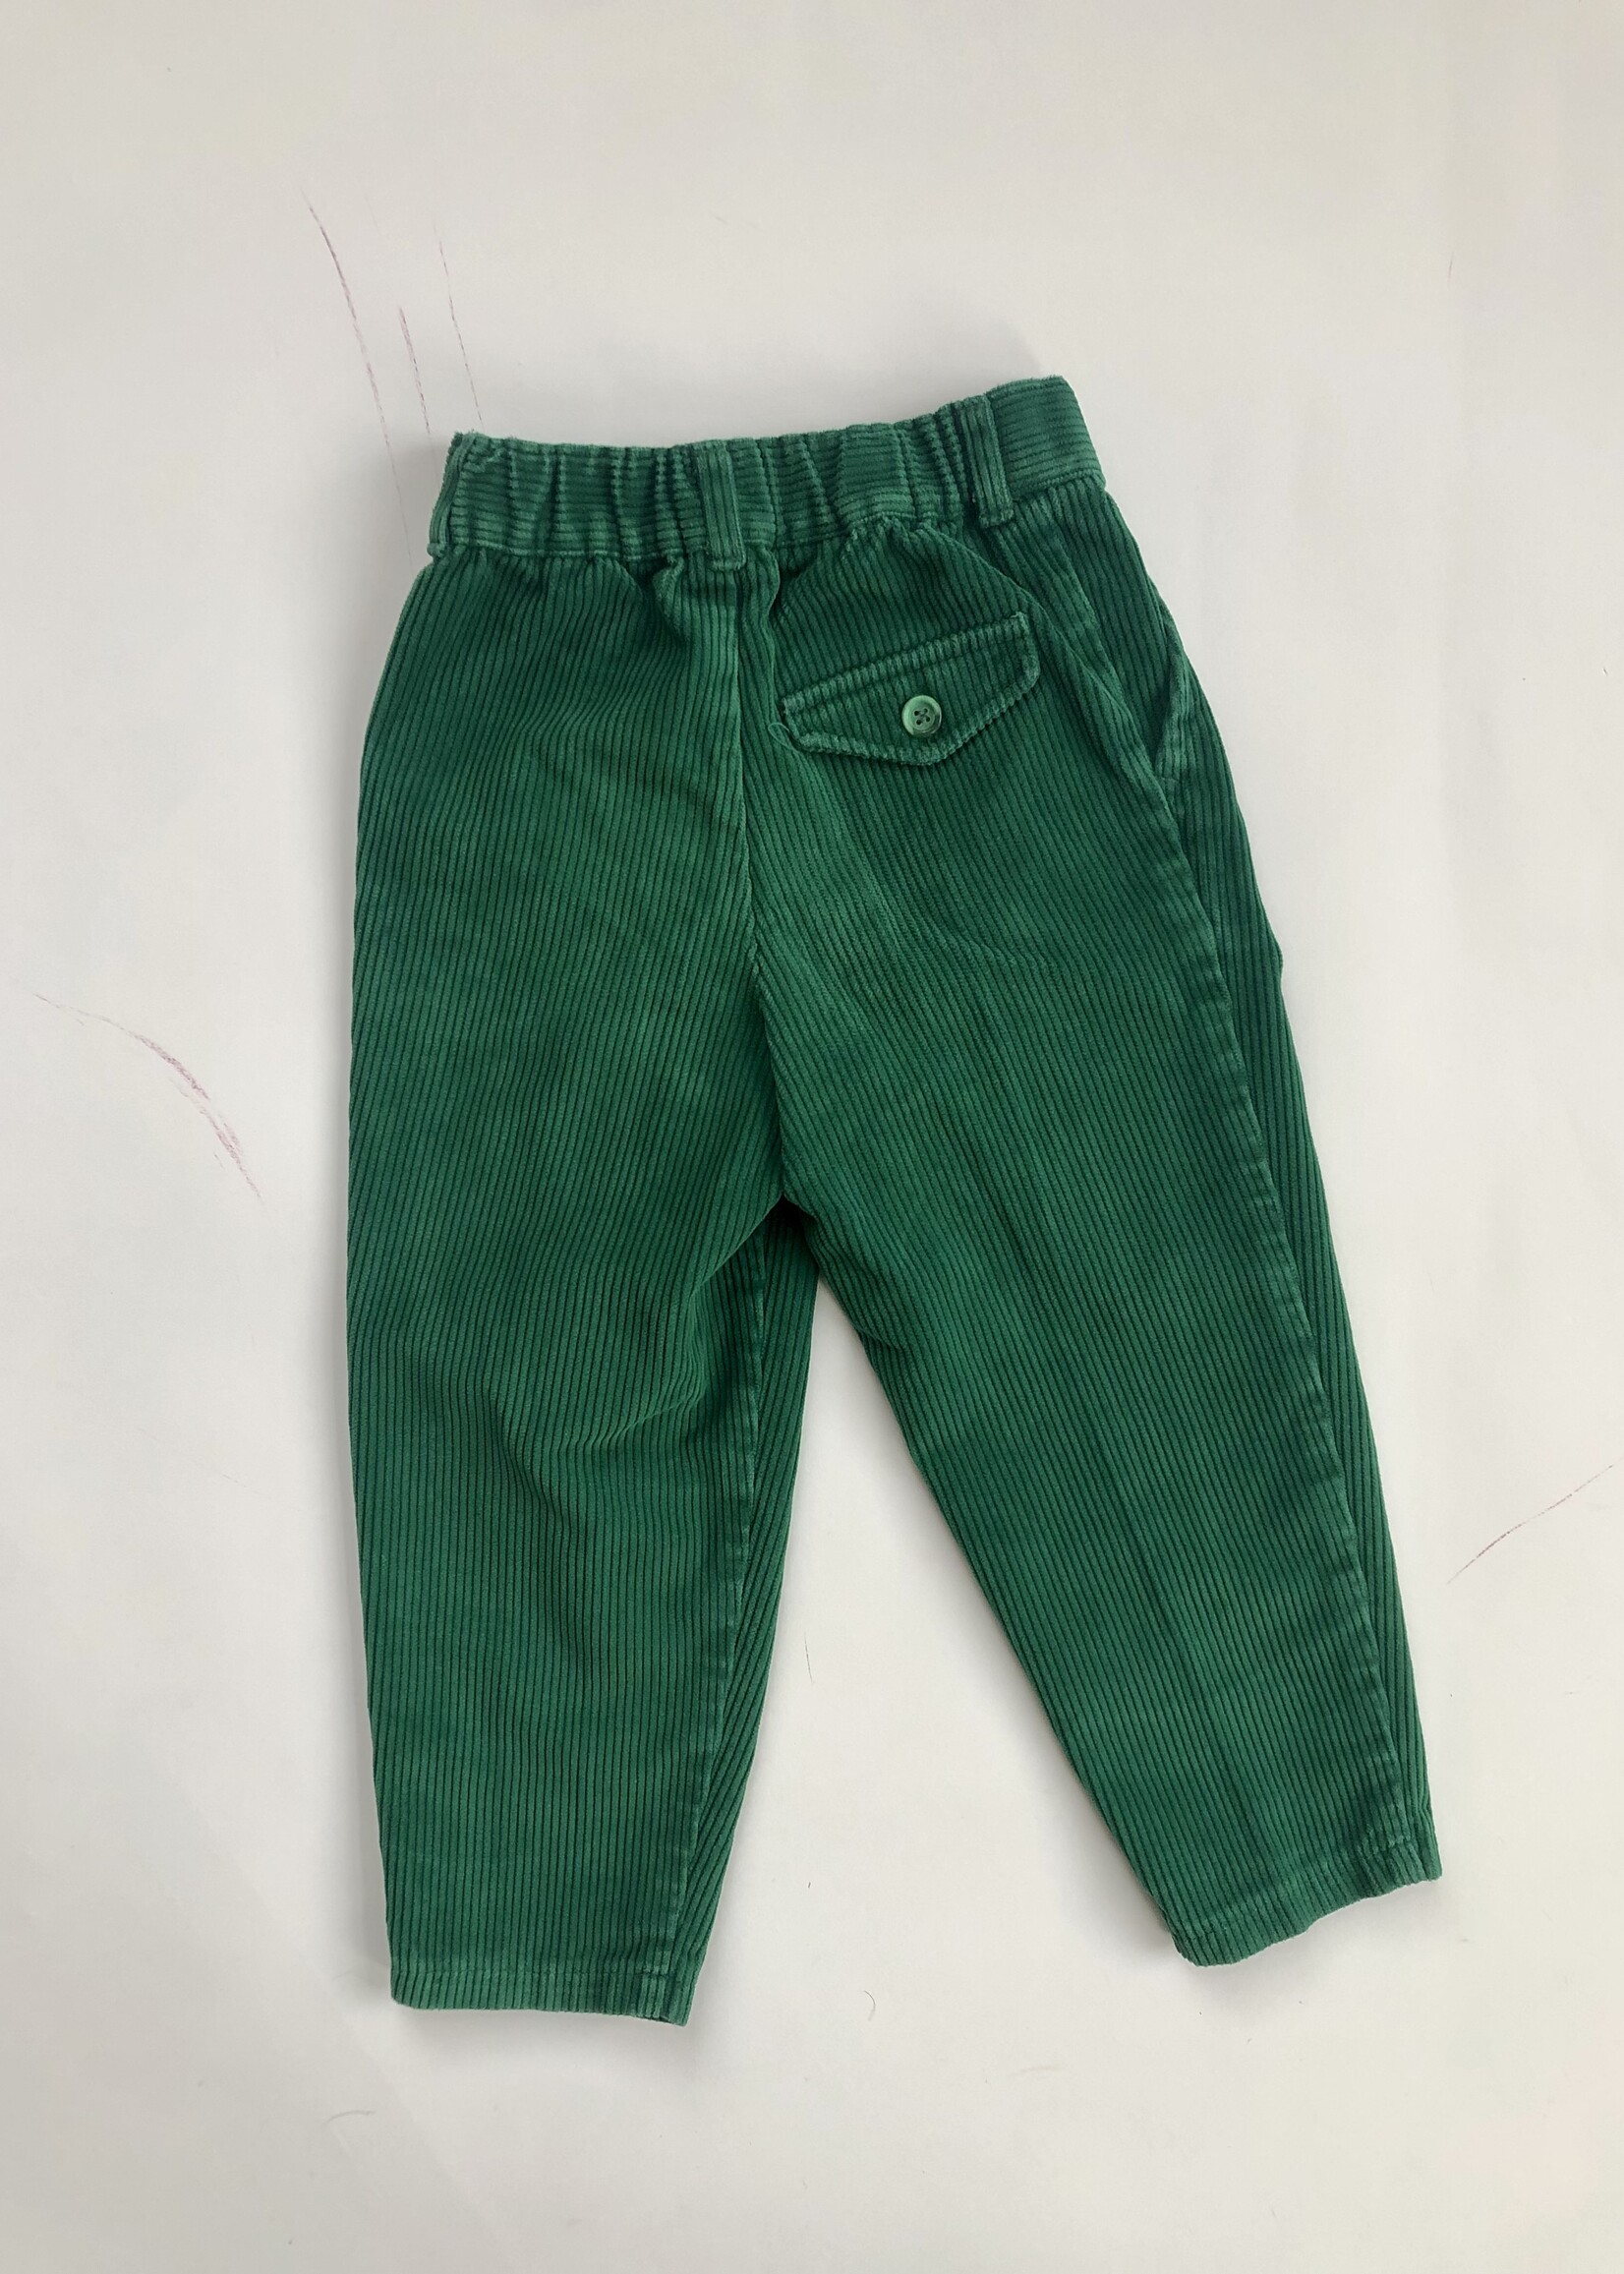 Vintage Green corduroy chino pants 3-4y